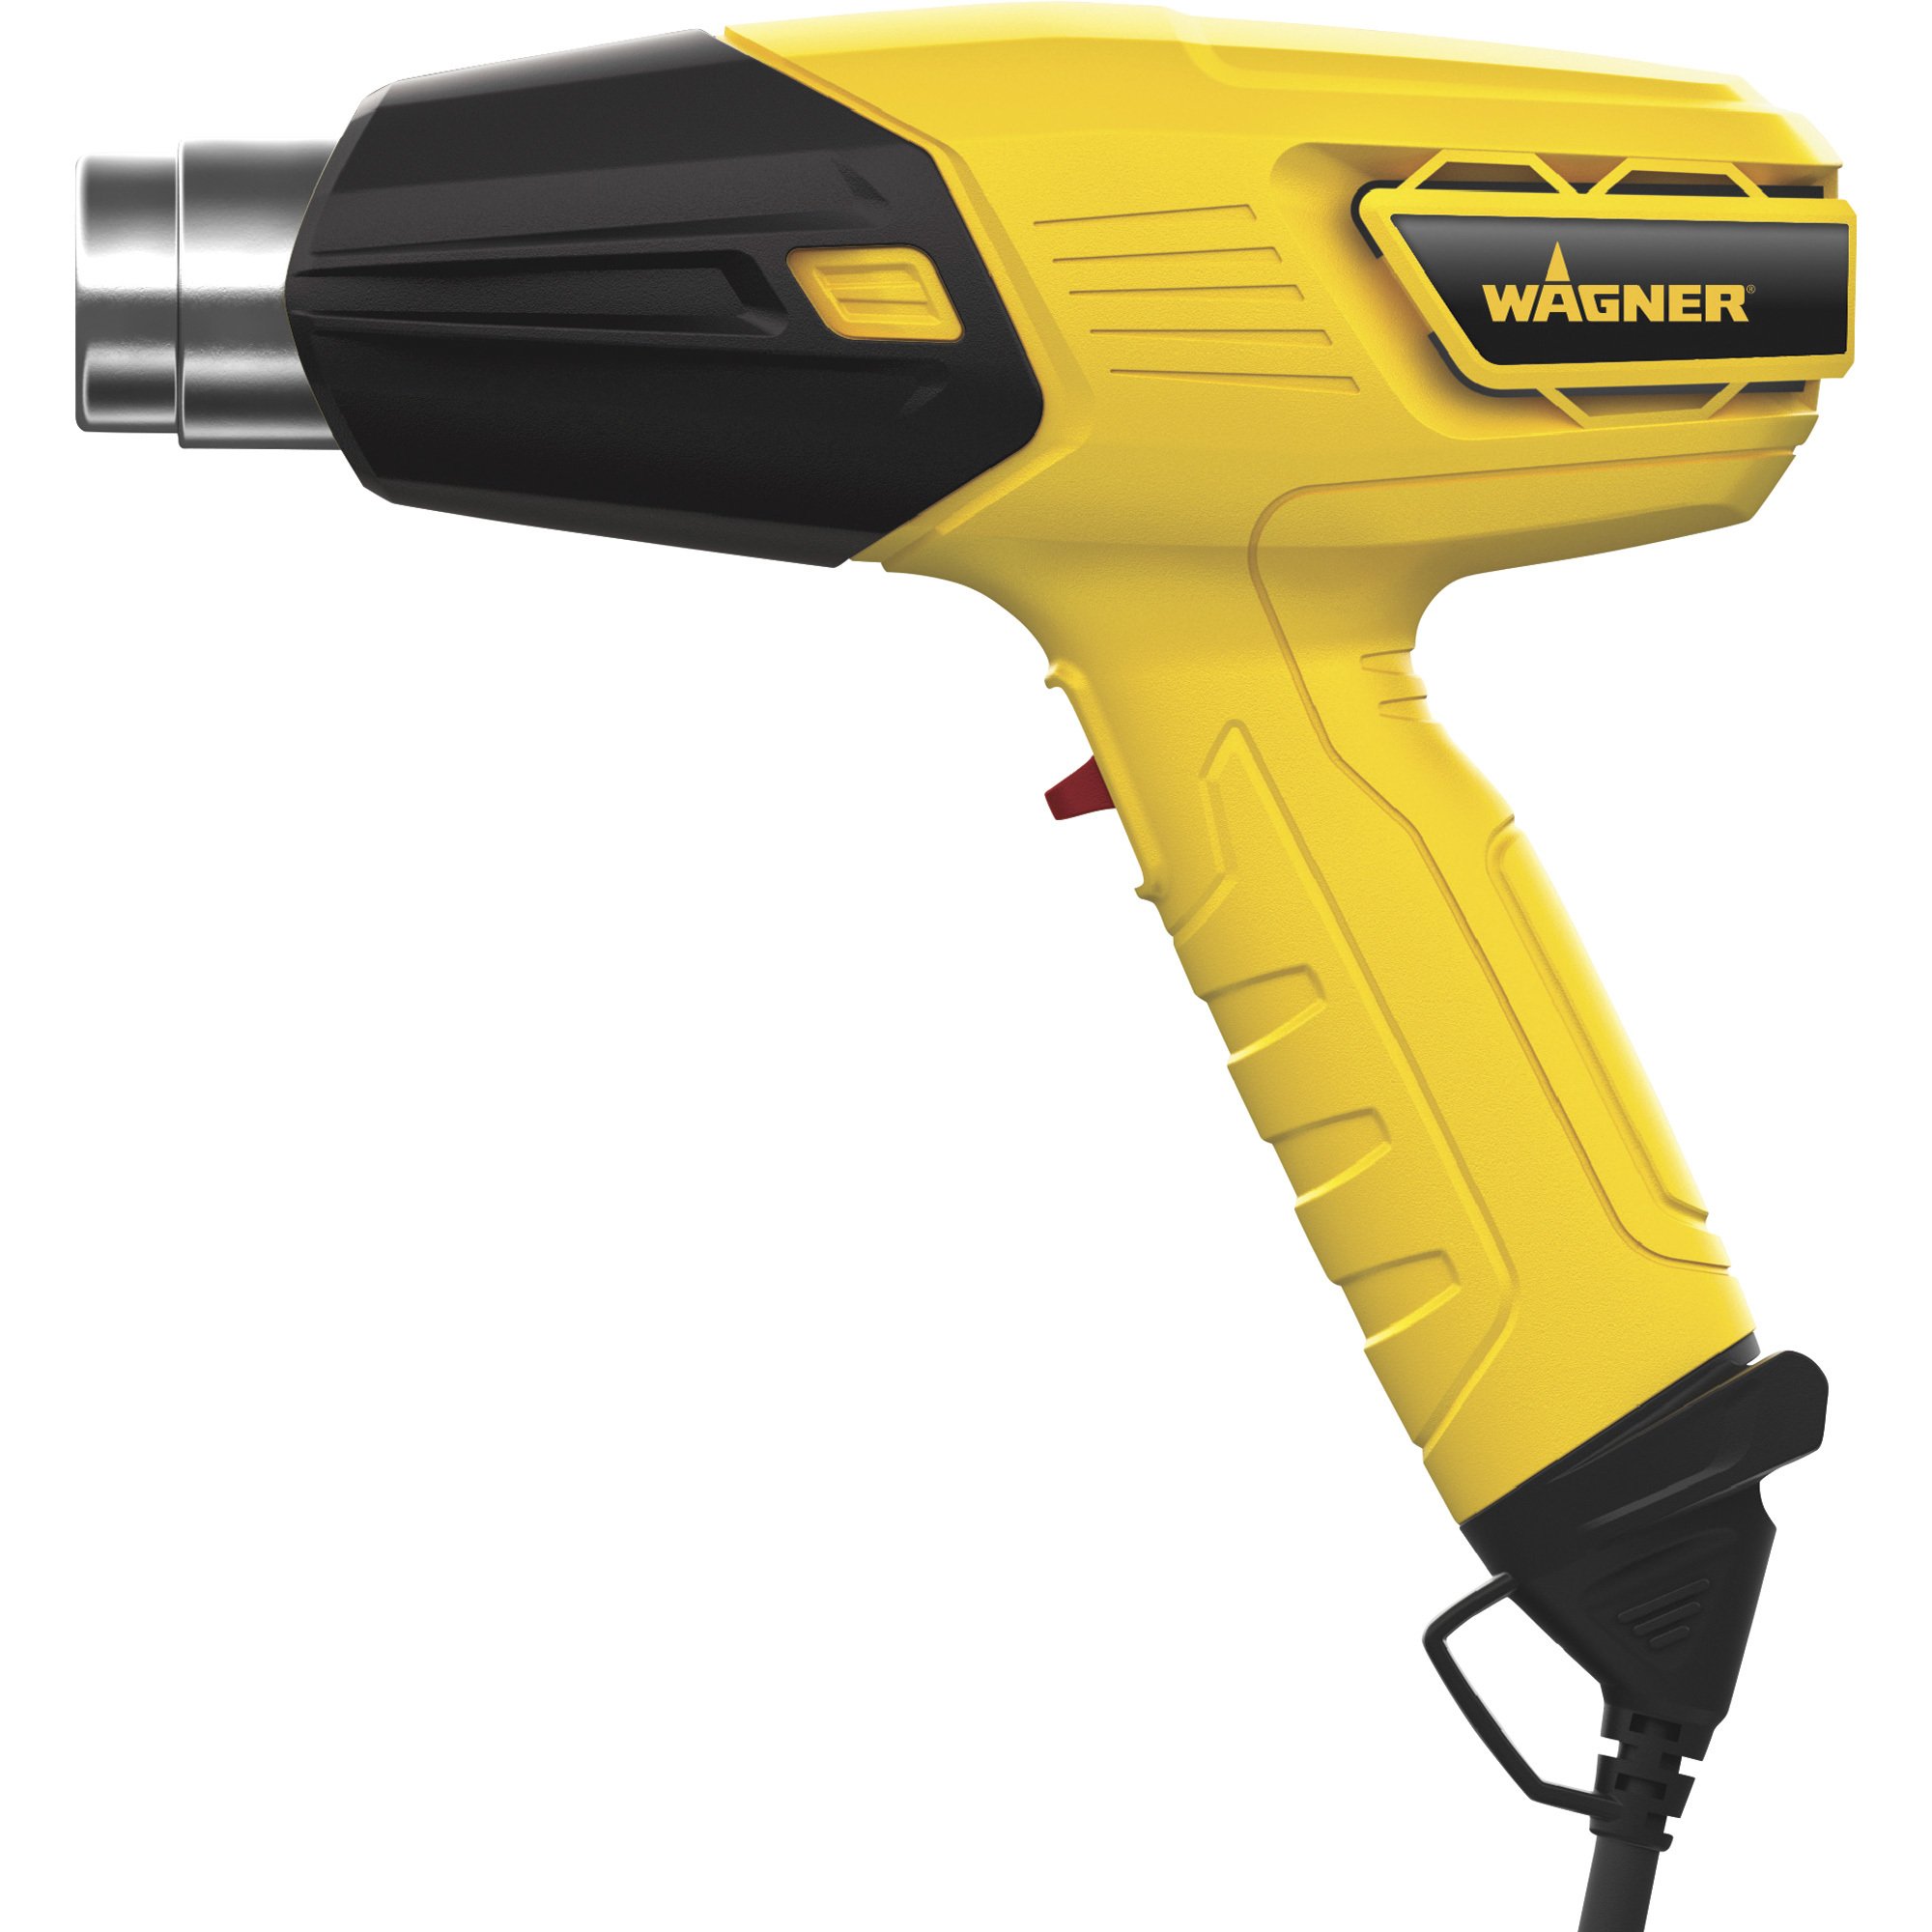 FURNO Tool Dual Model# Gun Wagner — Heat 300 Tool Temperature Watt/4100 0503059 Amp, BTU, 10 | 1200 Northern